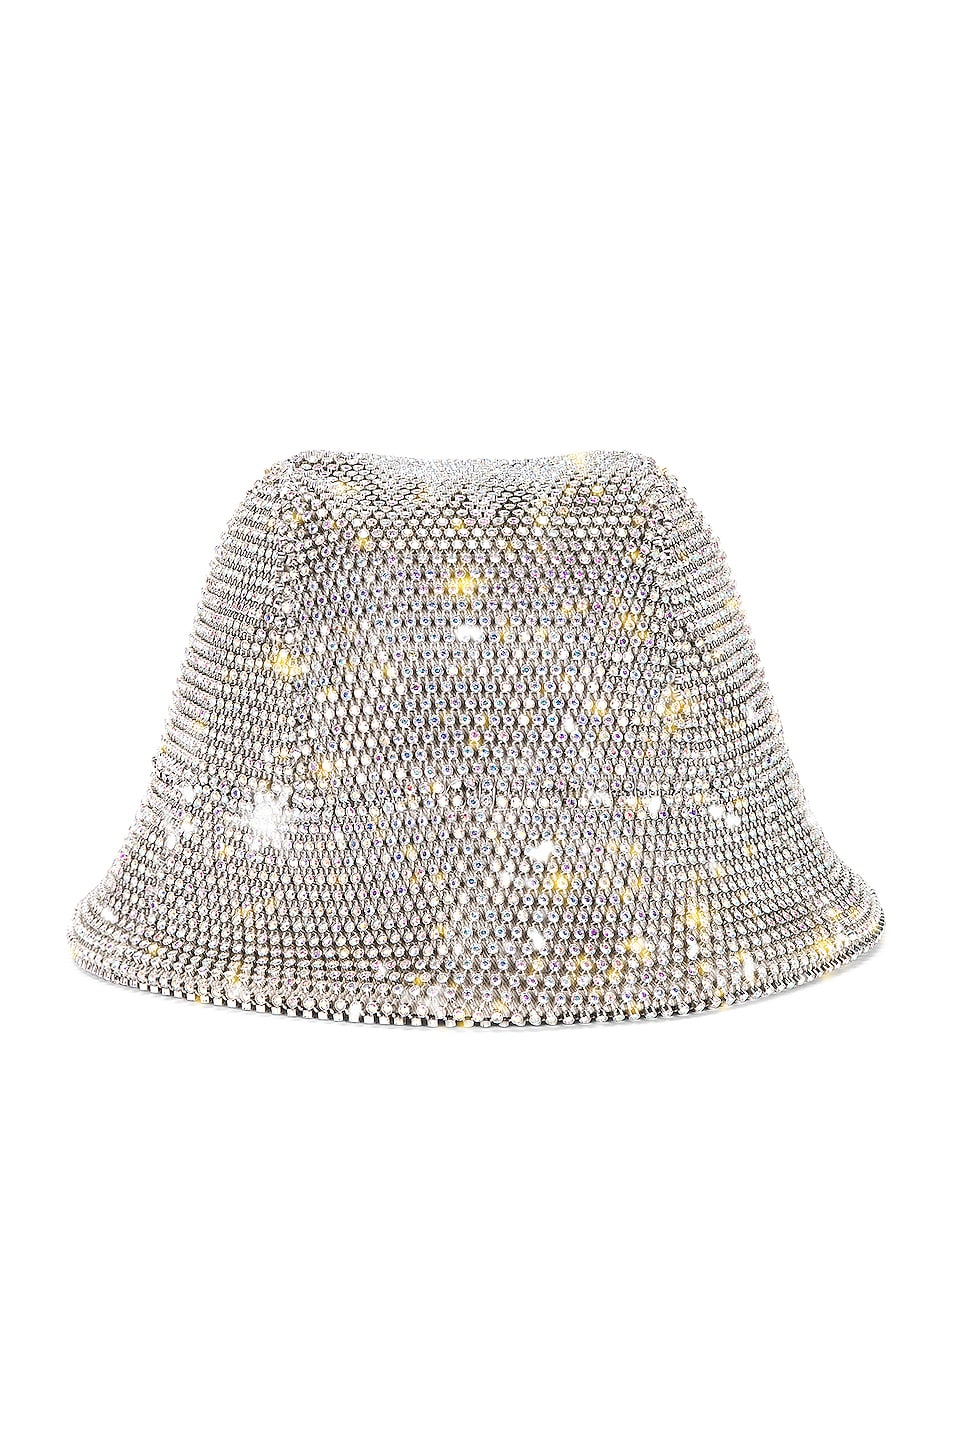 Moonlight Panama Hat in Metallic Silver